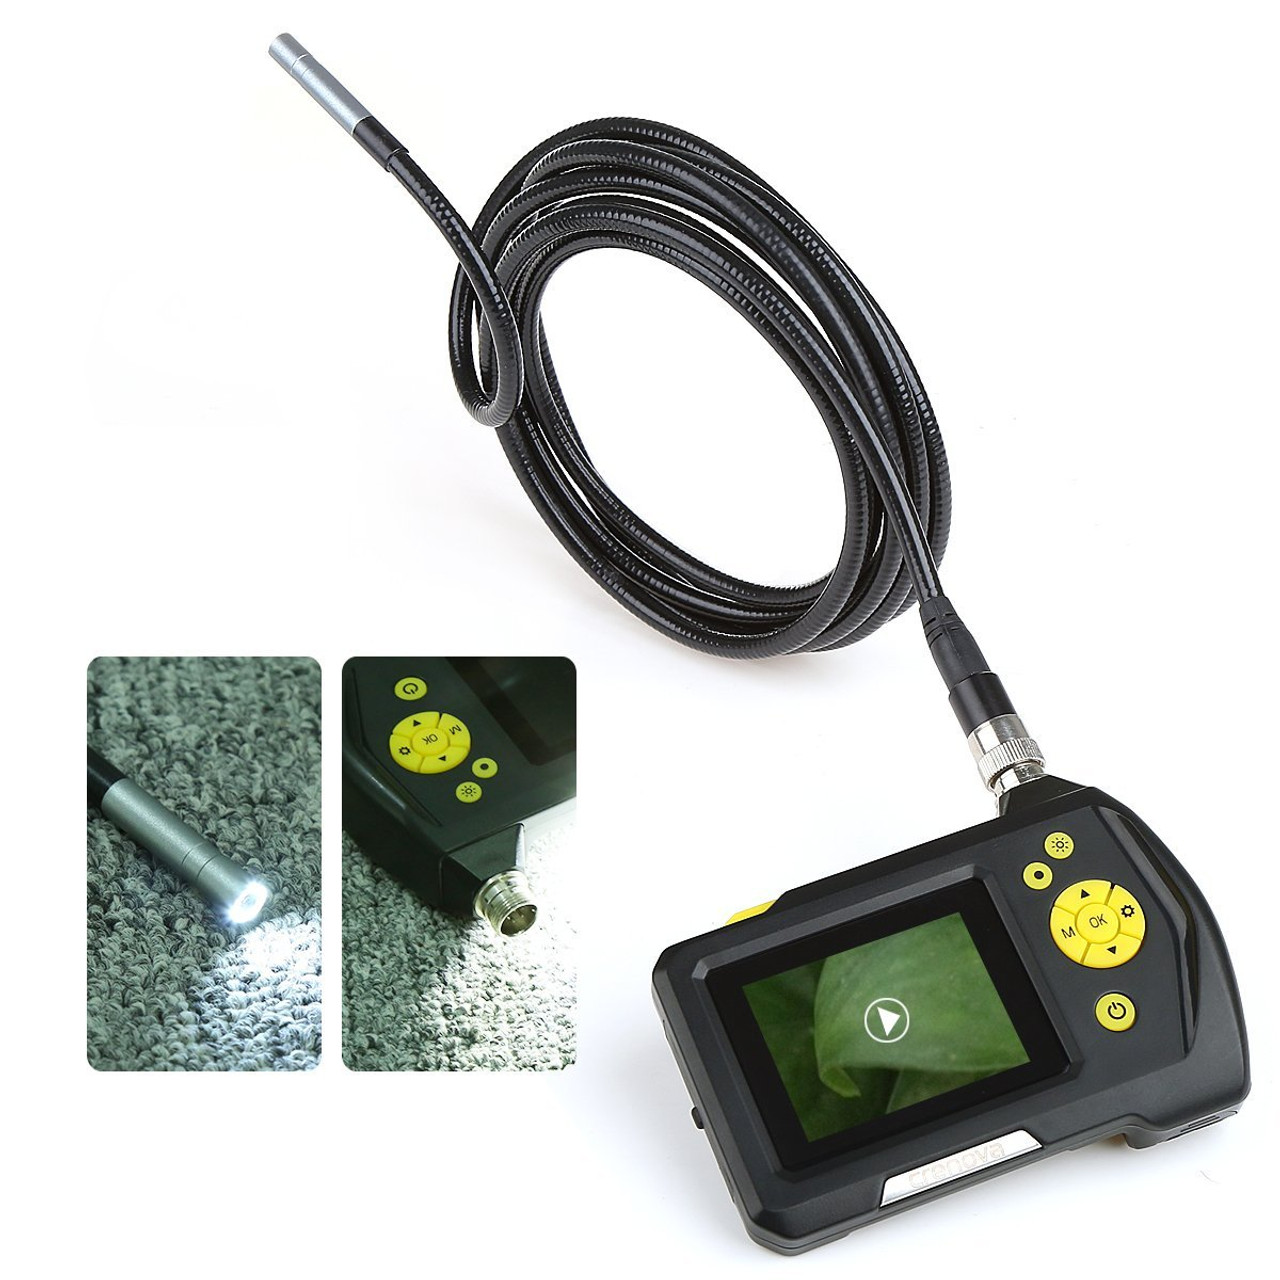 Waterproof Endoscope Borescope Inspection Snake Camera Kit